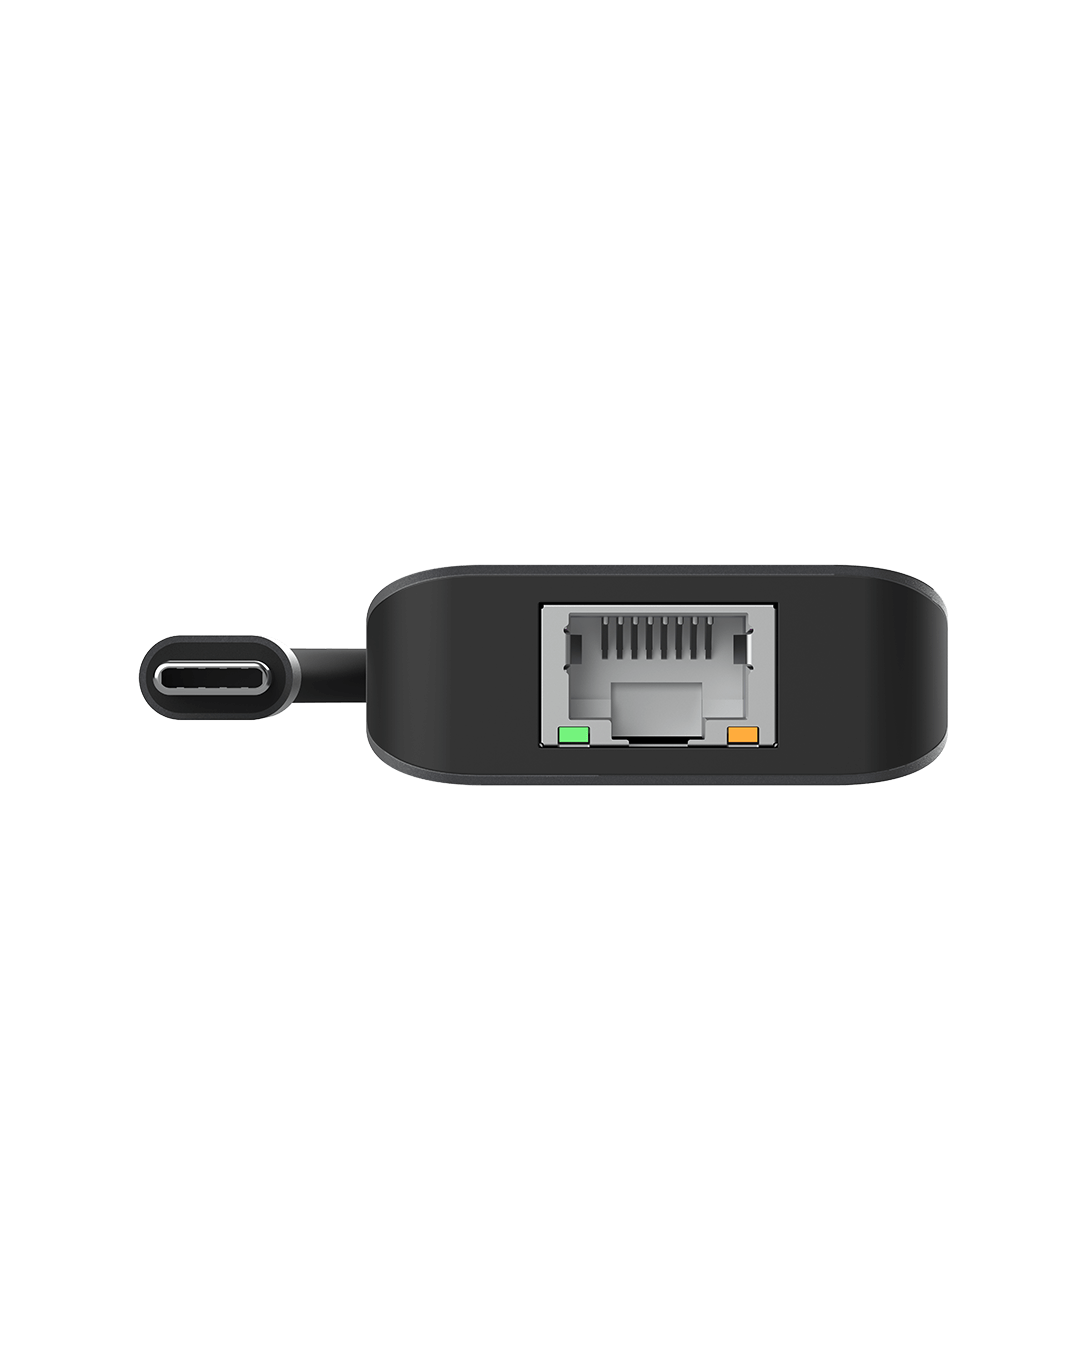 Sitecom - 6 in 1 USB-C LAN Multiport Adapter - CN-5503